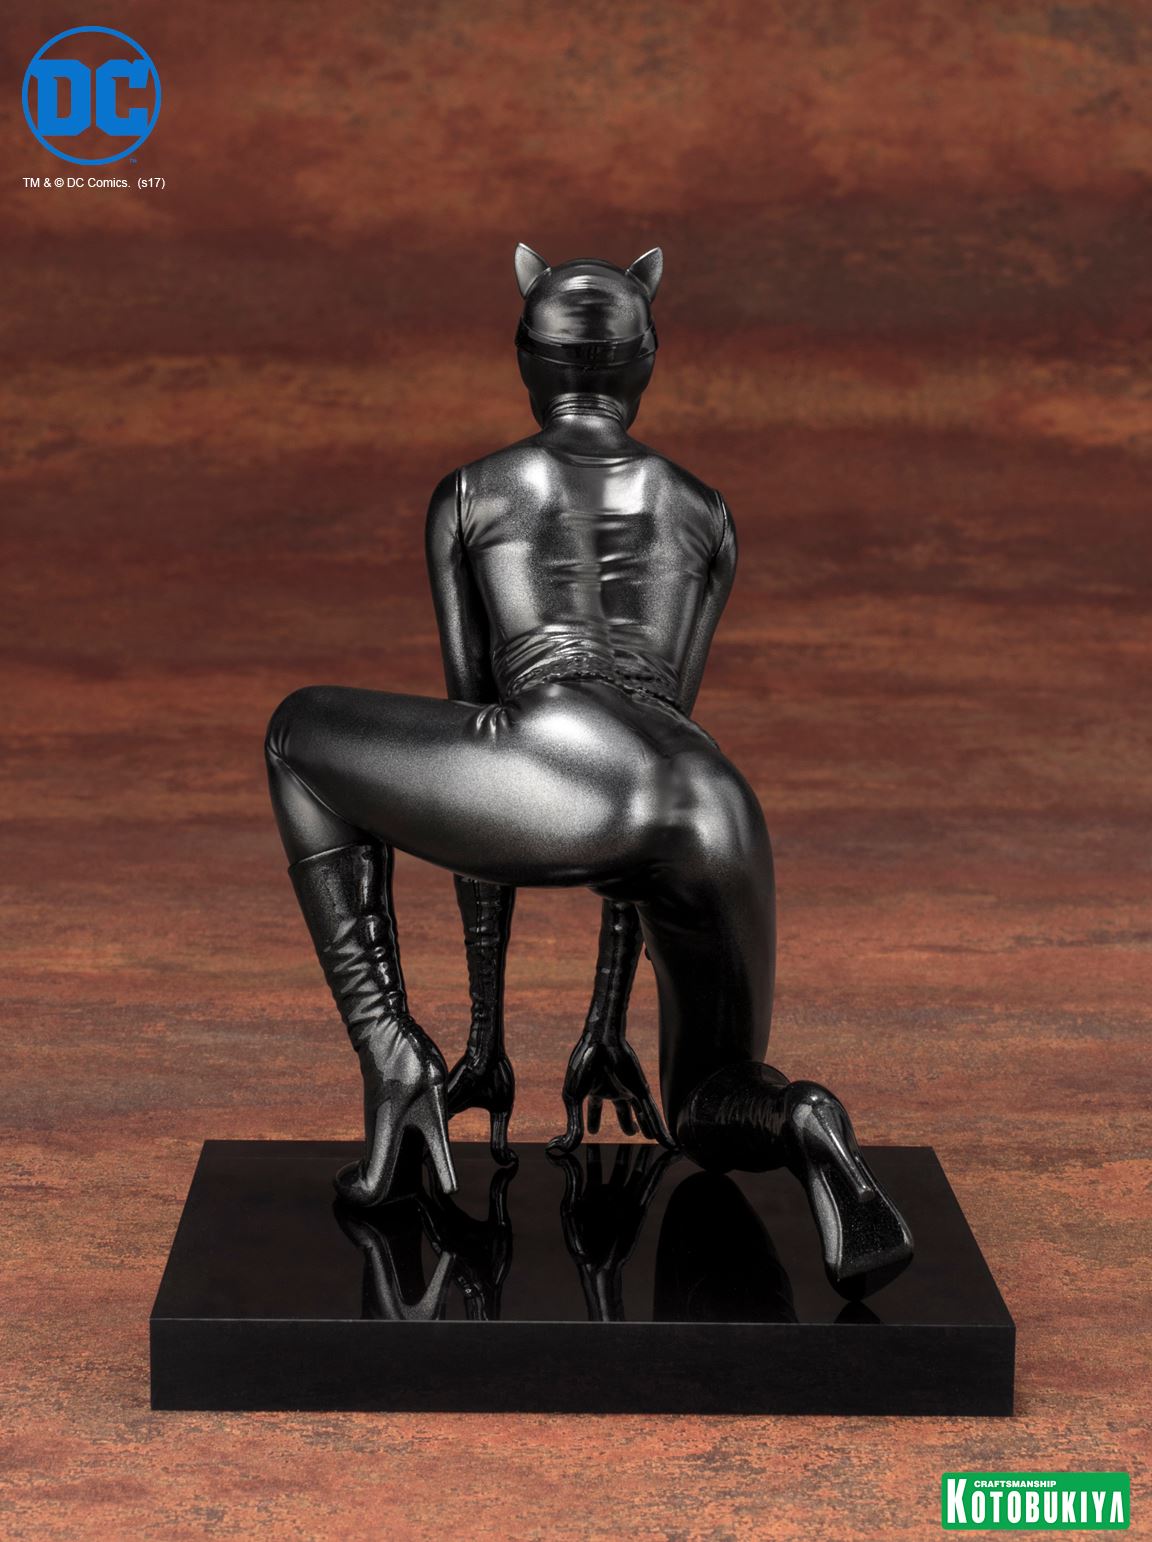 Kotobukiya DC Comics ARTFX+ Catwoman Statue